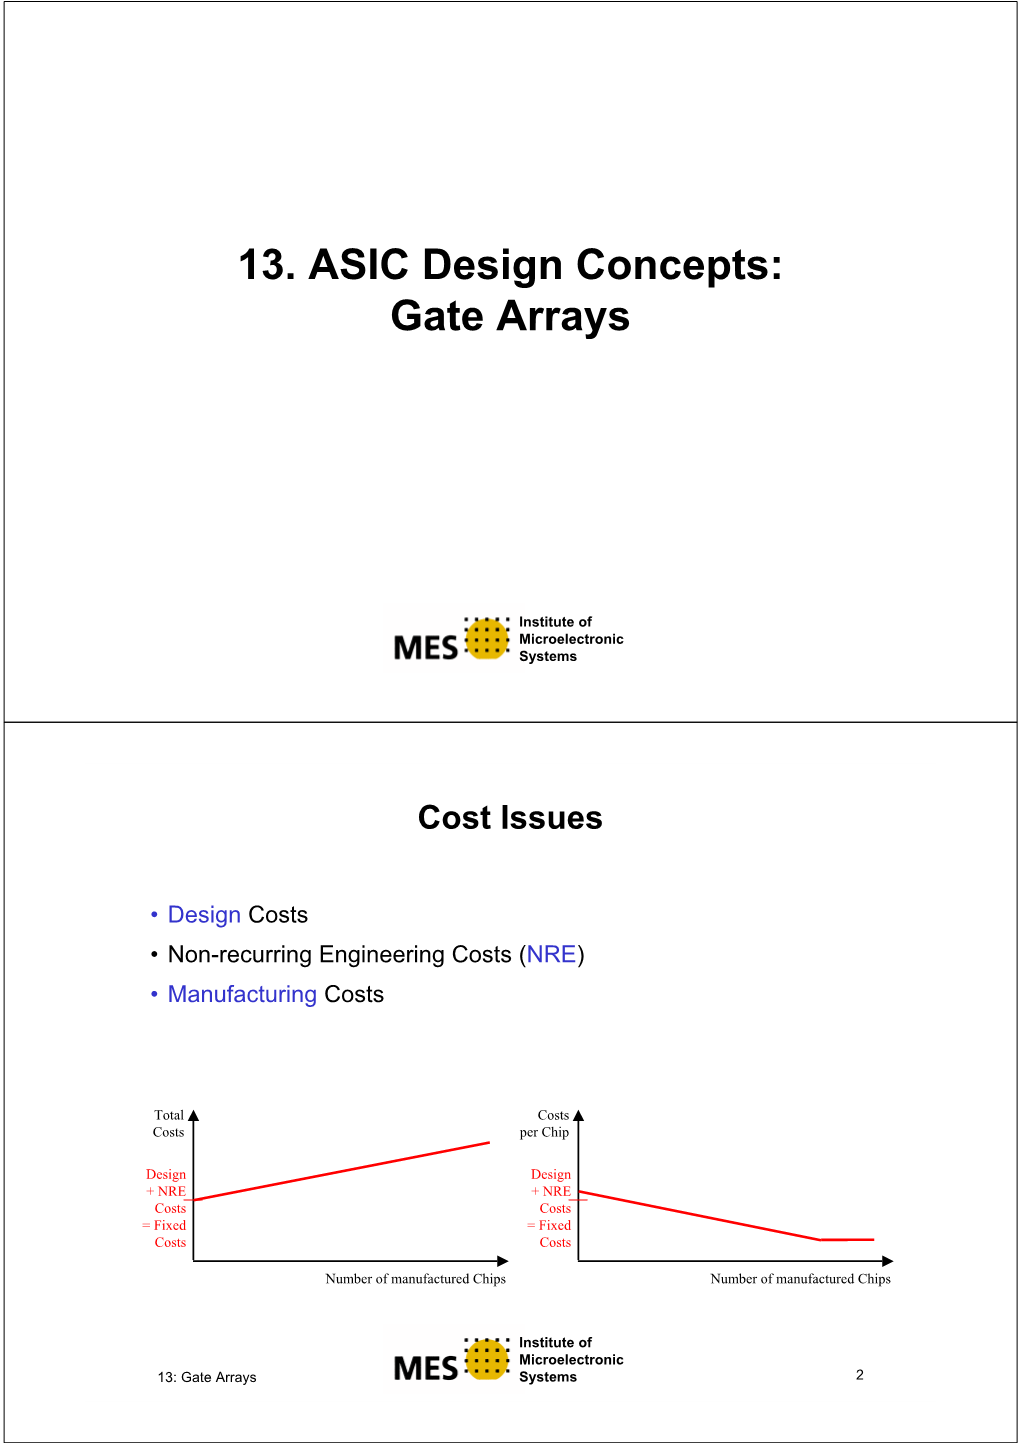 13. ASIC Design Concepts: Gate Arrays